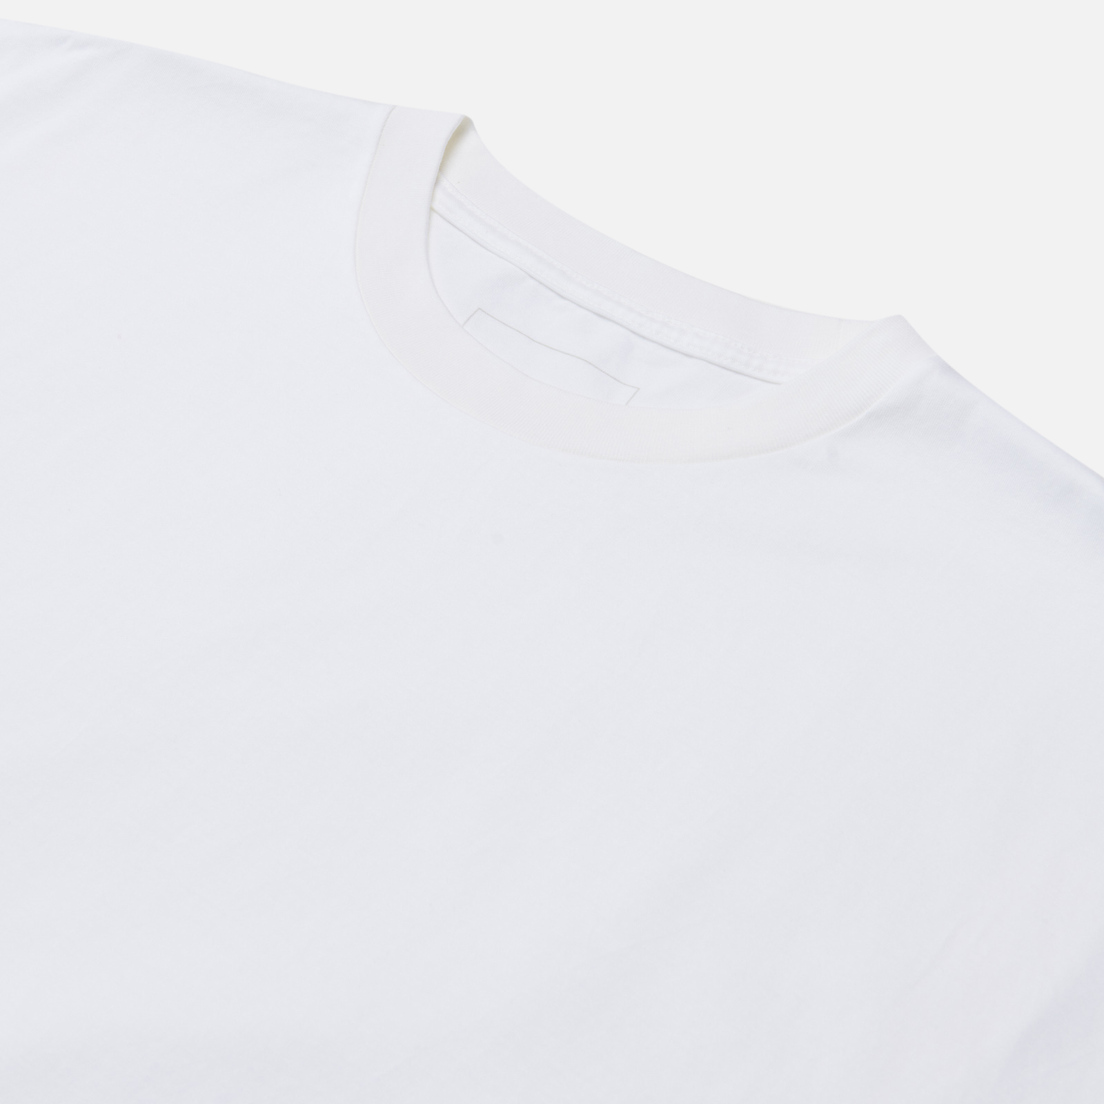 SOPHNET. Мужская футболка Essential Ultima Single Jersey